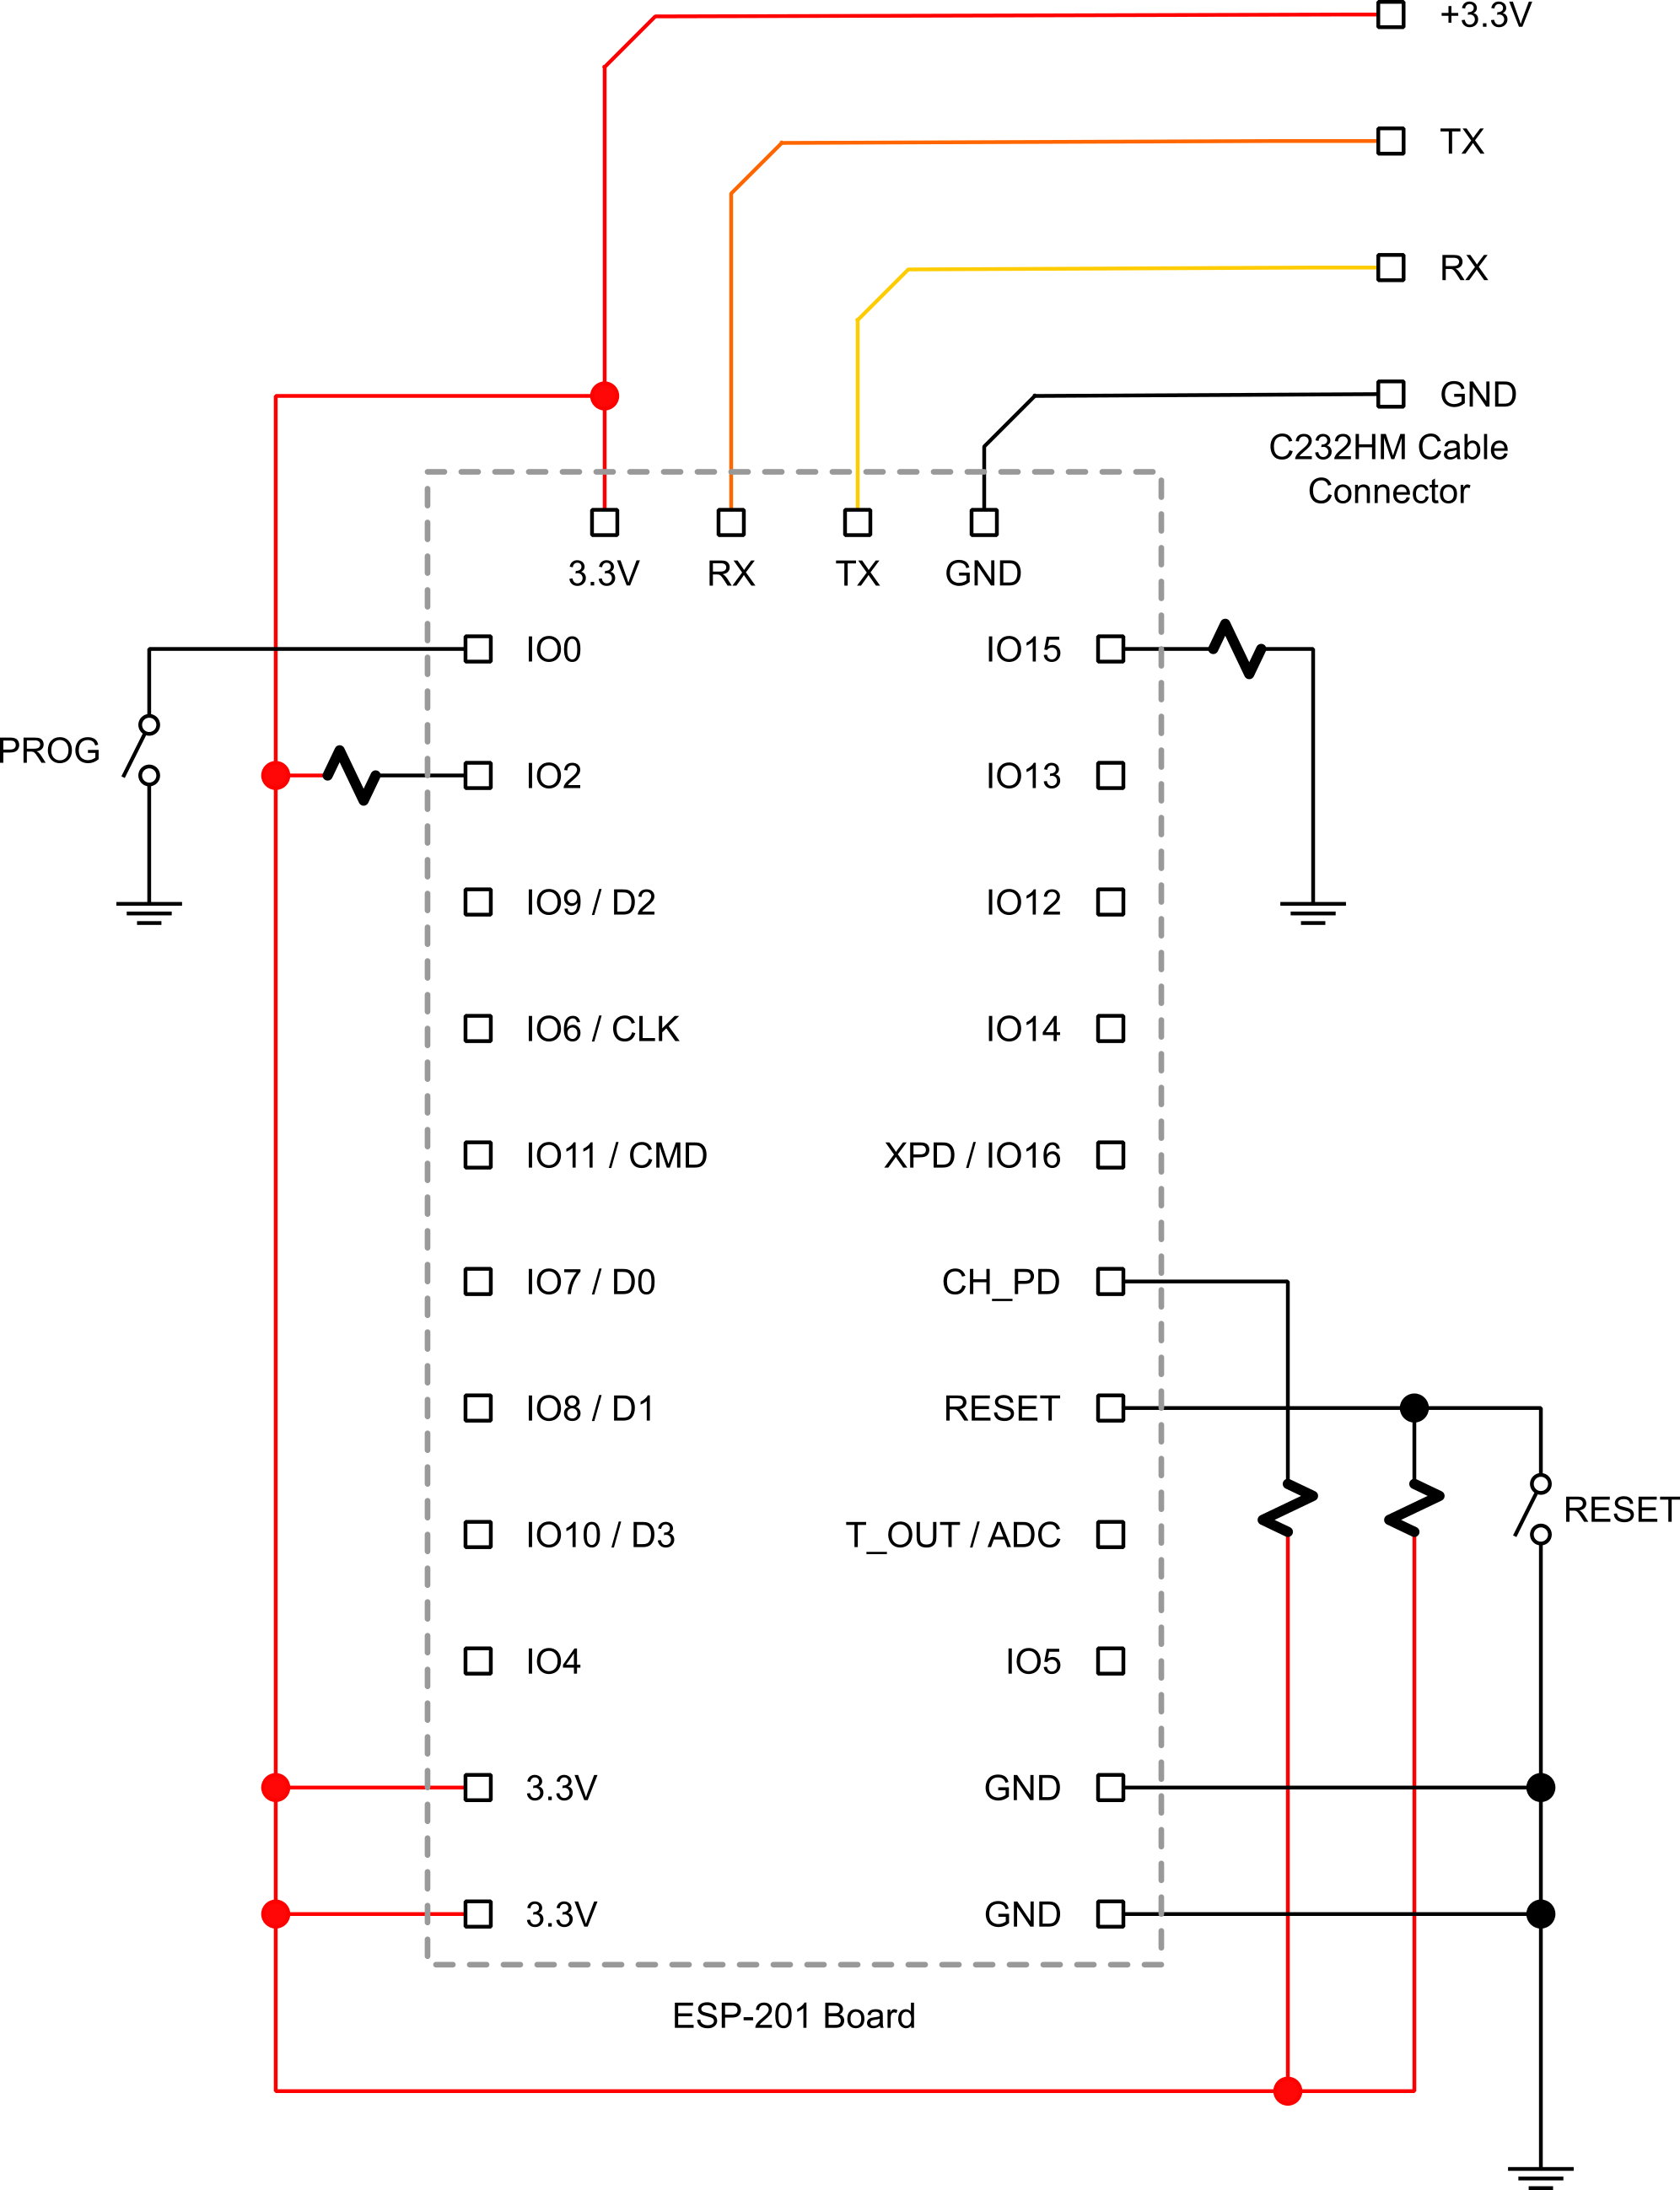 ESP-201 flash programming board schematic.